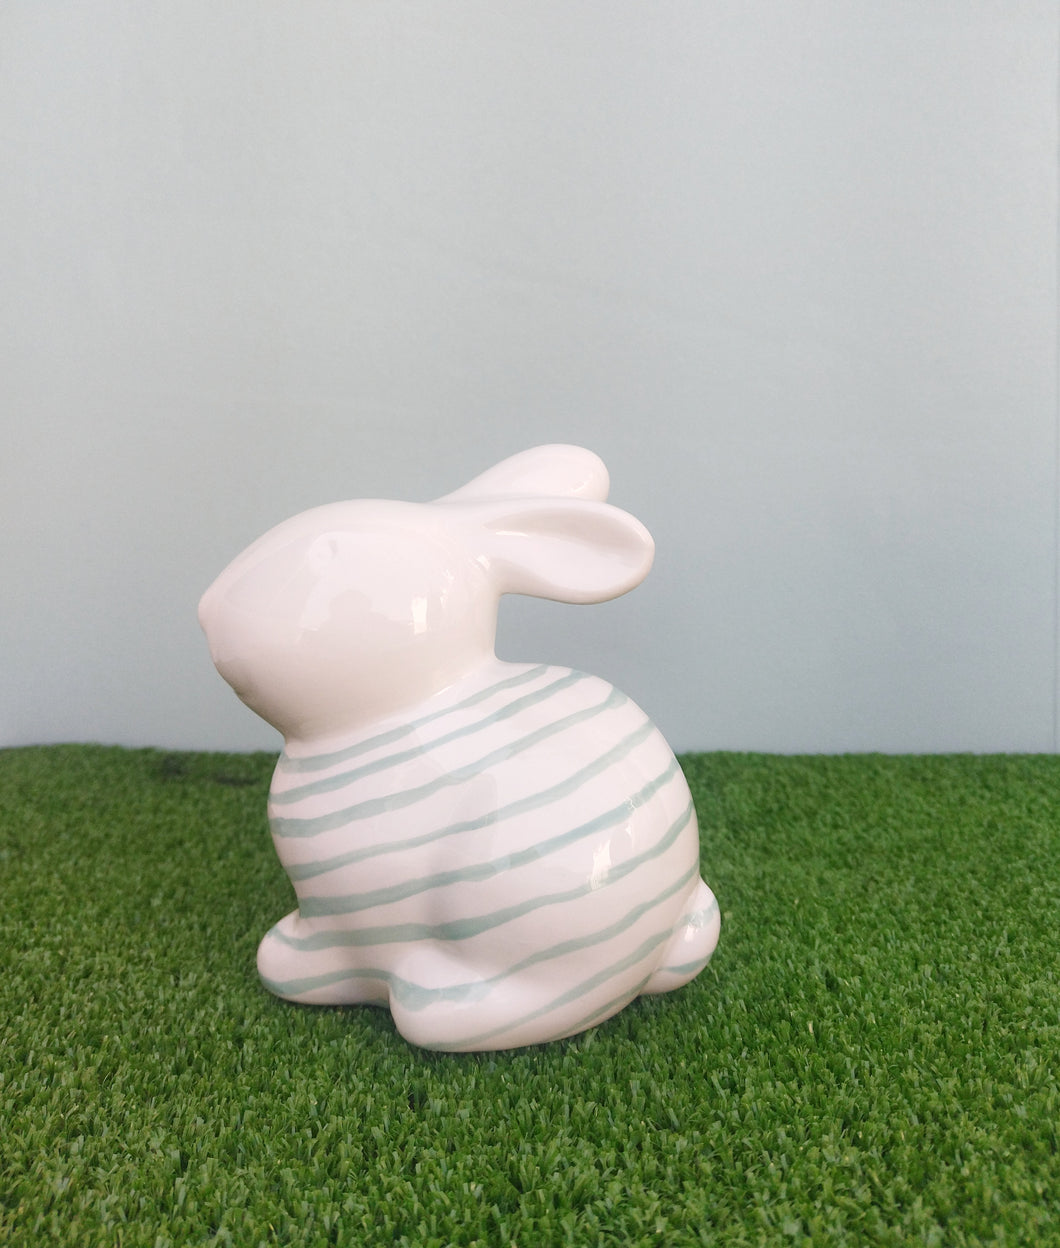 Easter Bunny Rabbit Ornament, White Ceramic Bunny Shelf Decor